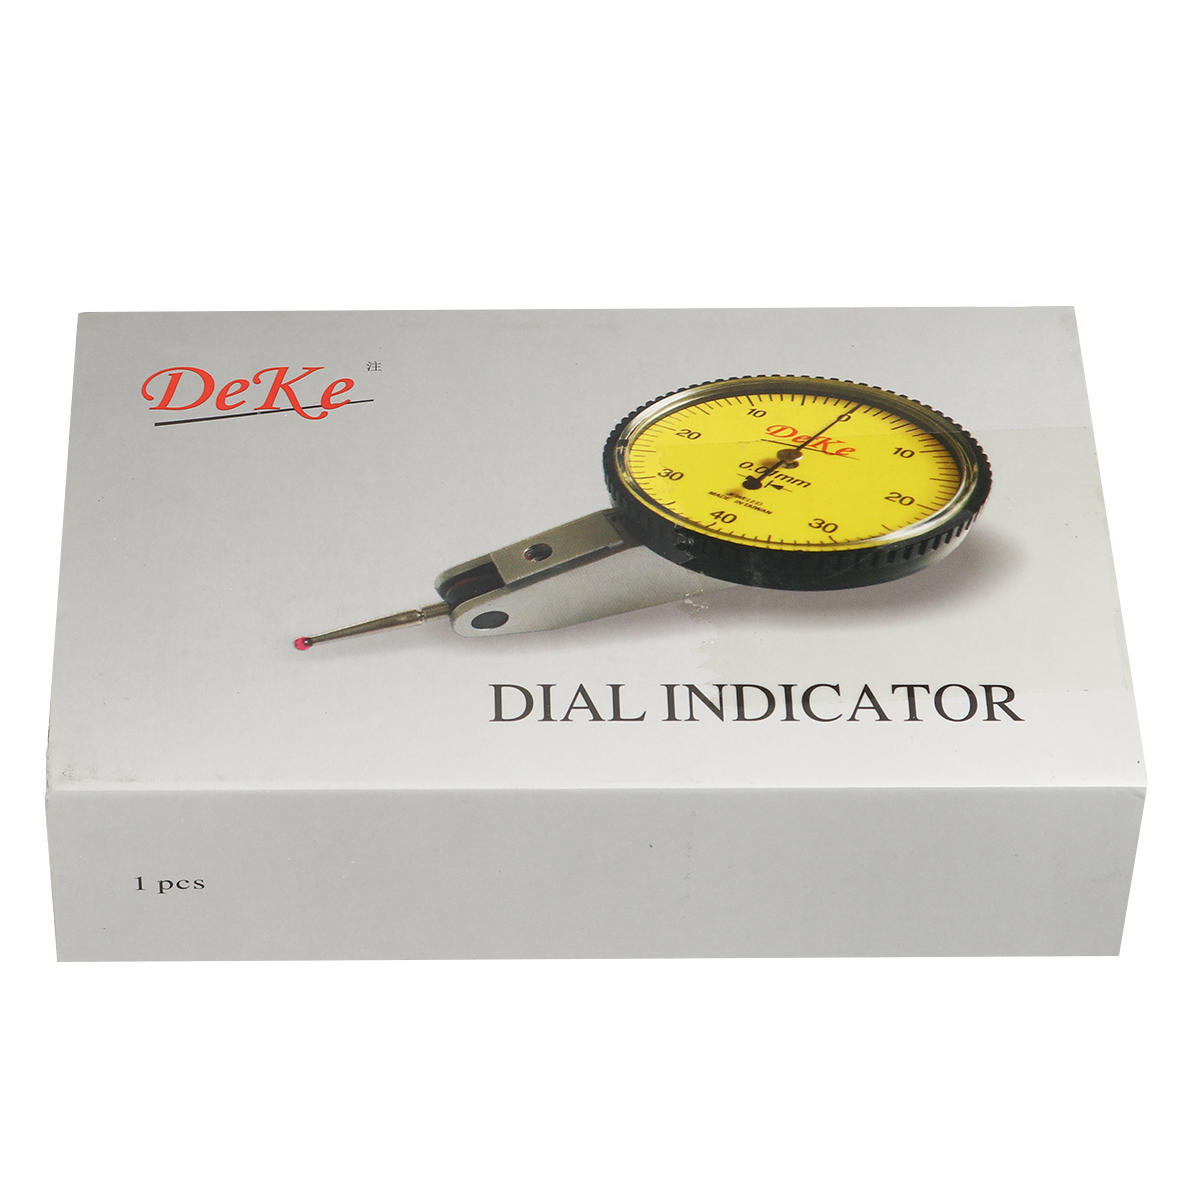 Precision Tools 0-0.8 mm 0.01 mm Metric Dial Test Indicator Metric Measuring Dial Indicator